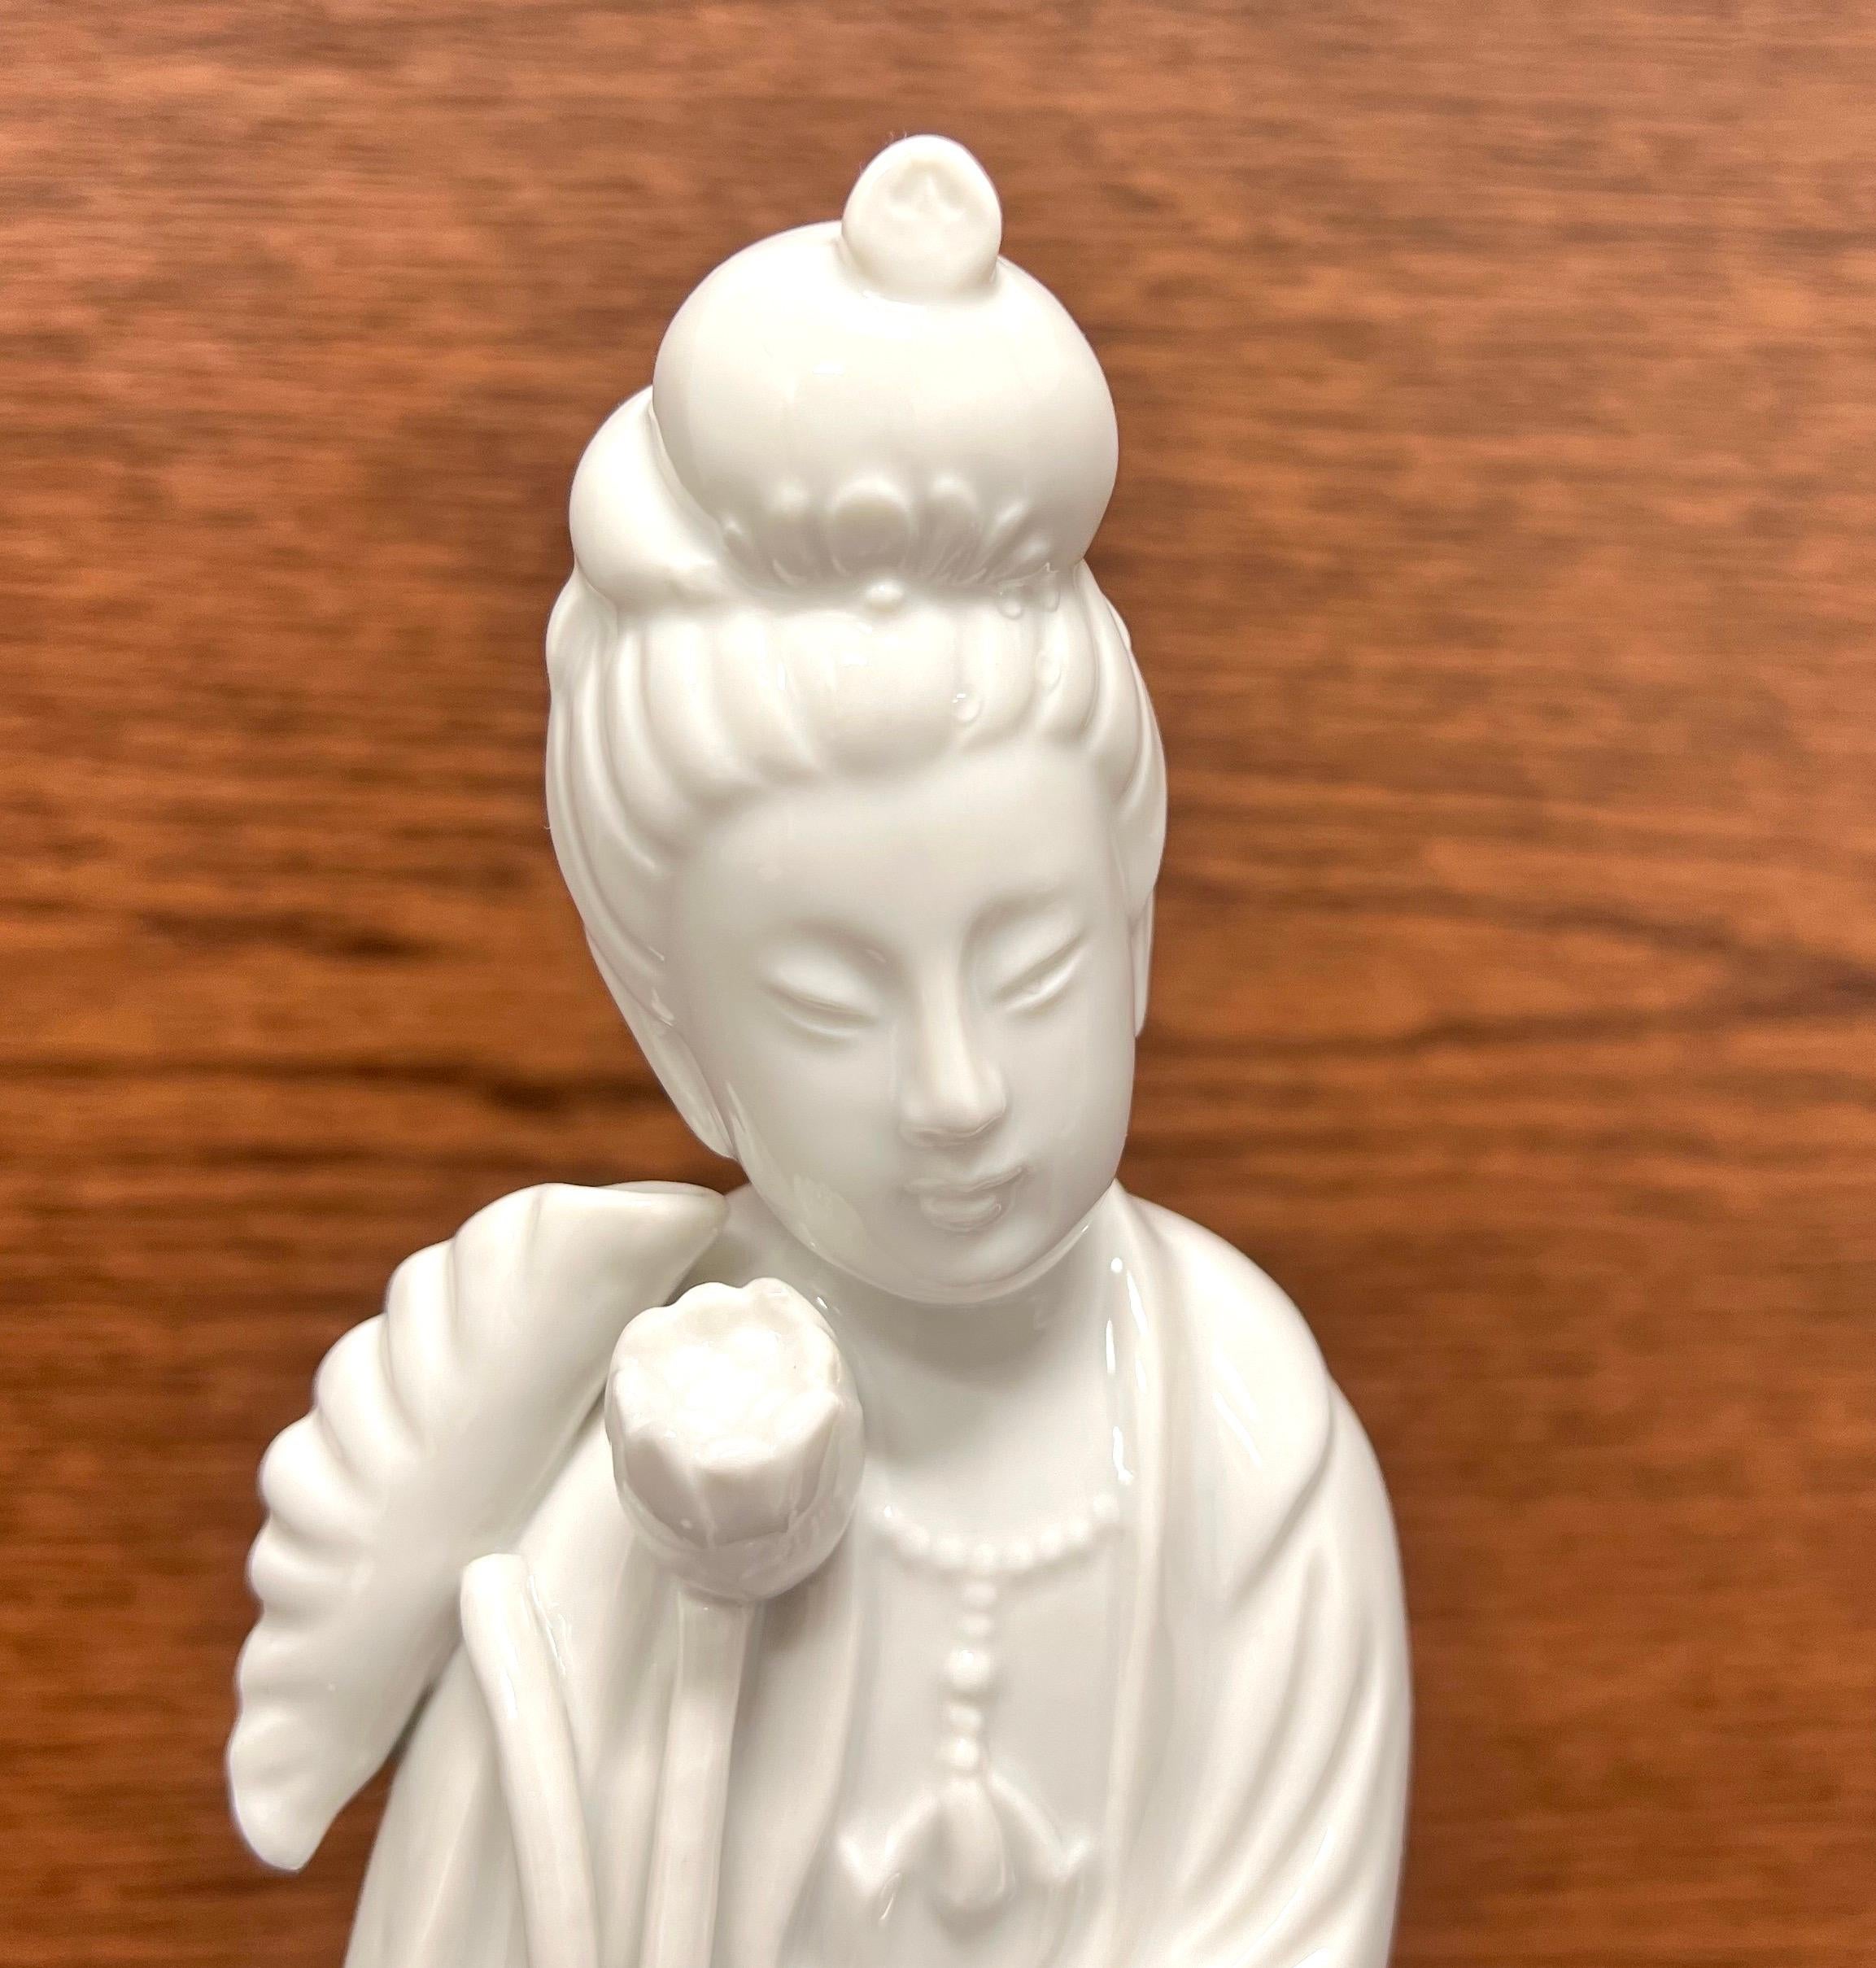 Japanese ANDREA BY SADEK White Porcelain Quan Yin Goddess of Mercy Figurines - Pair For Sale